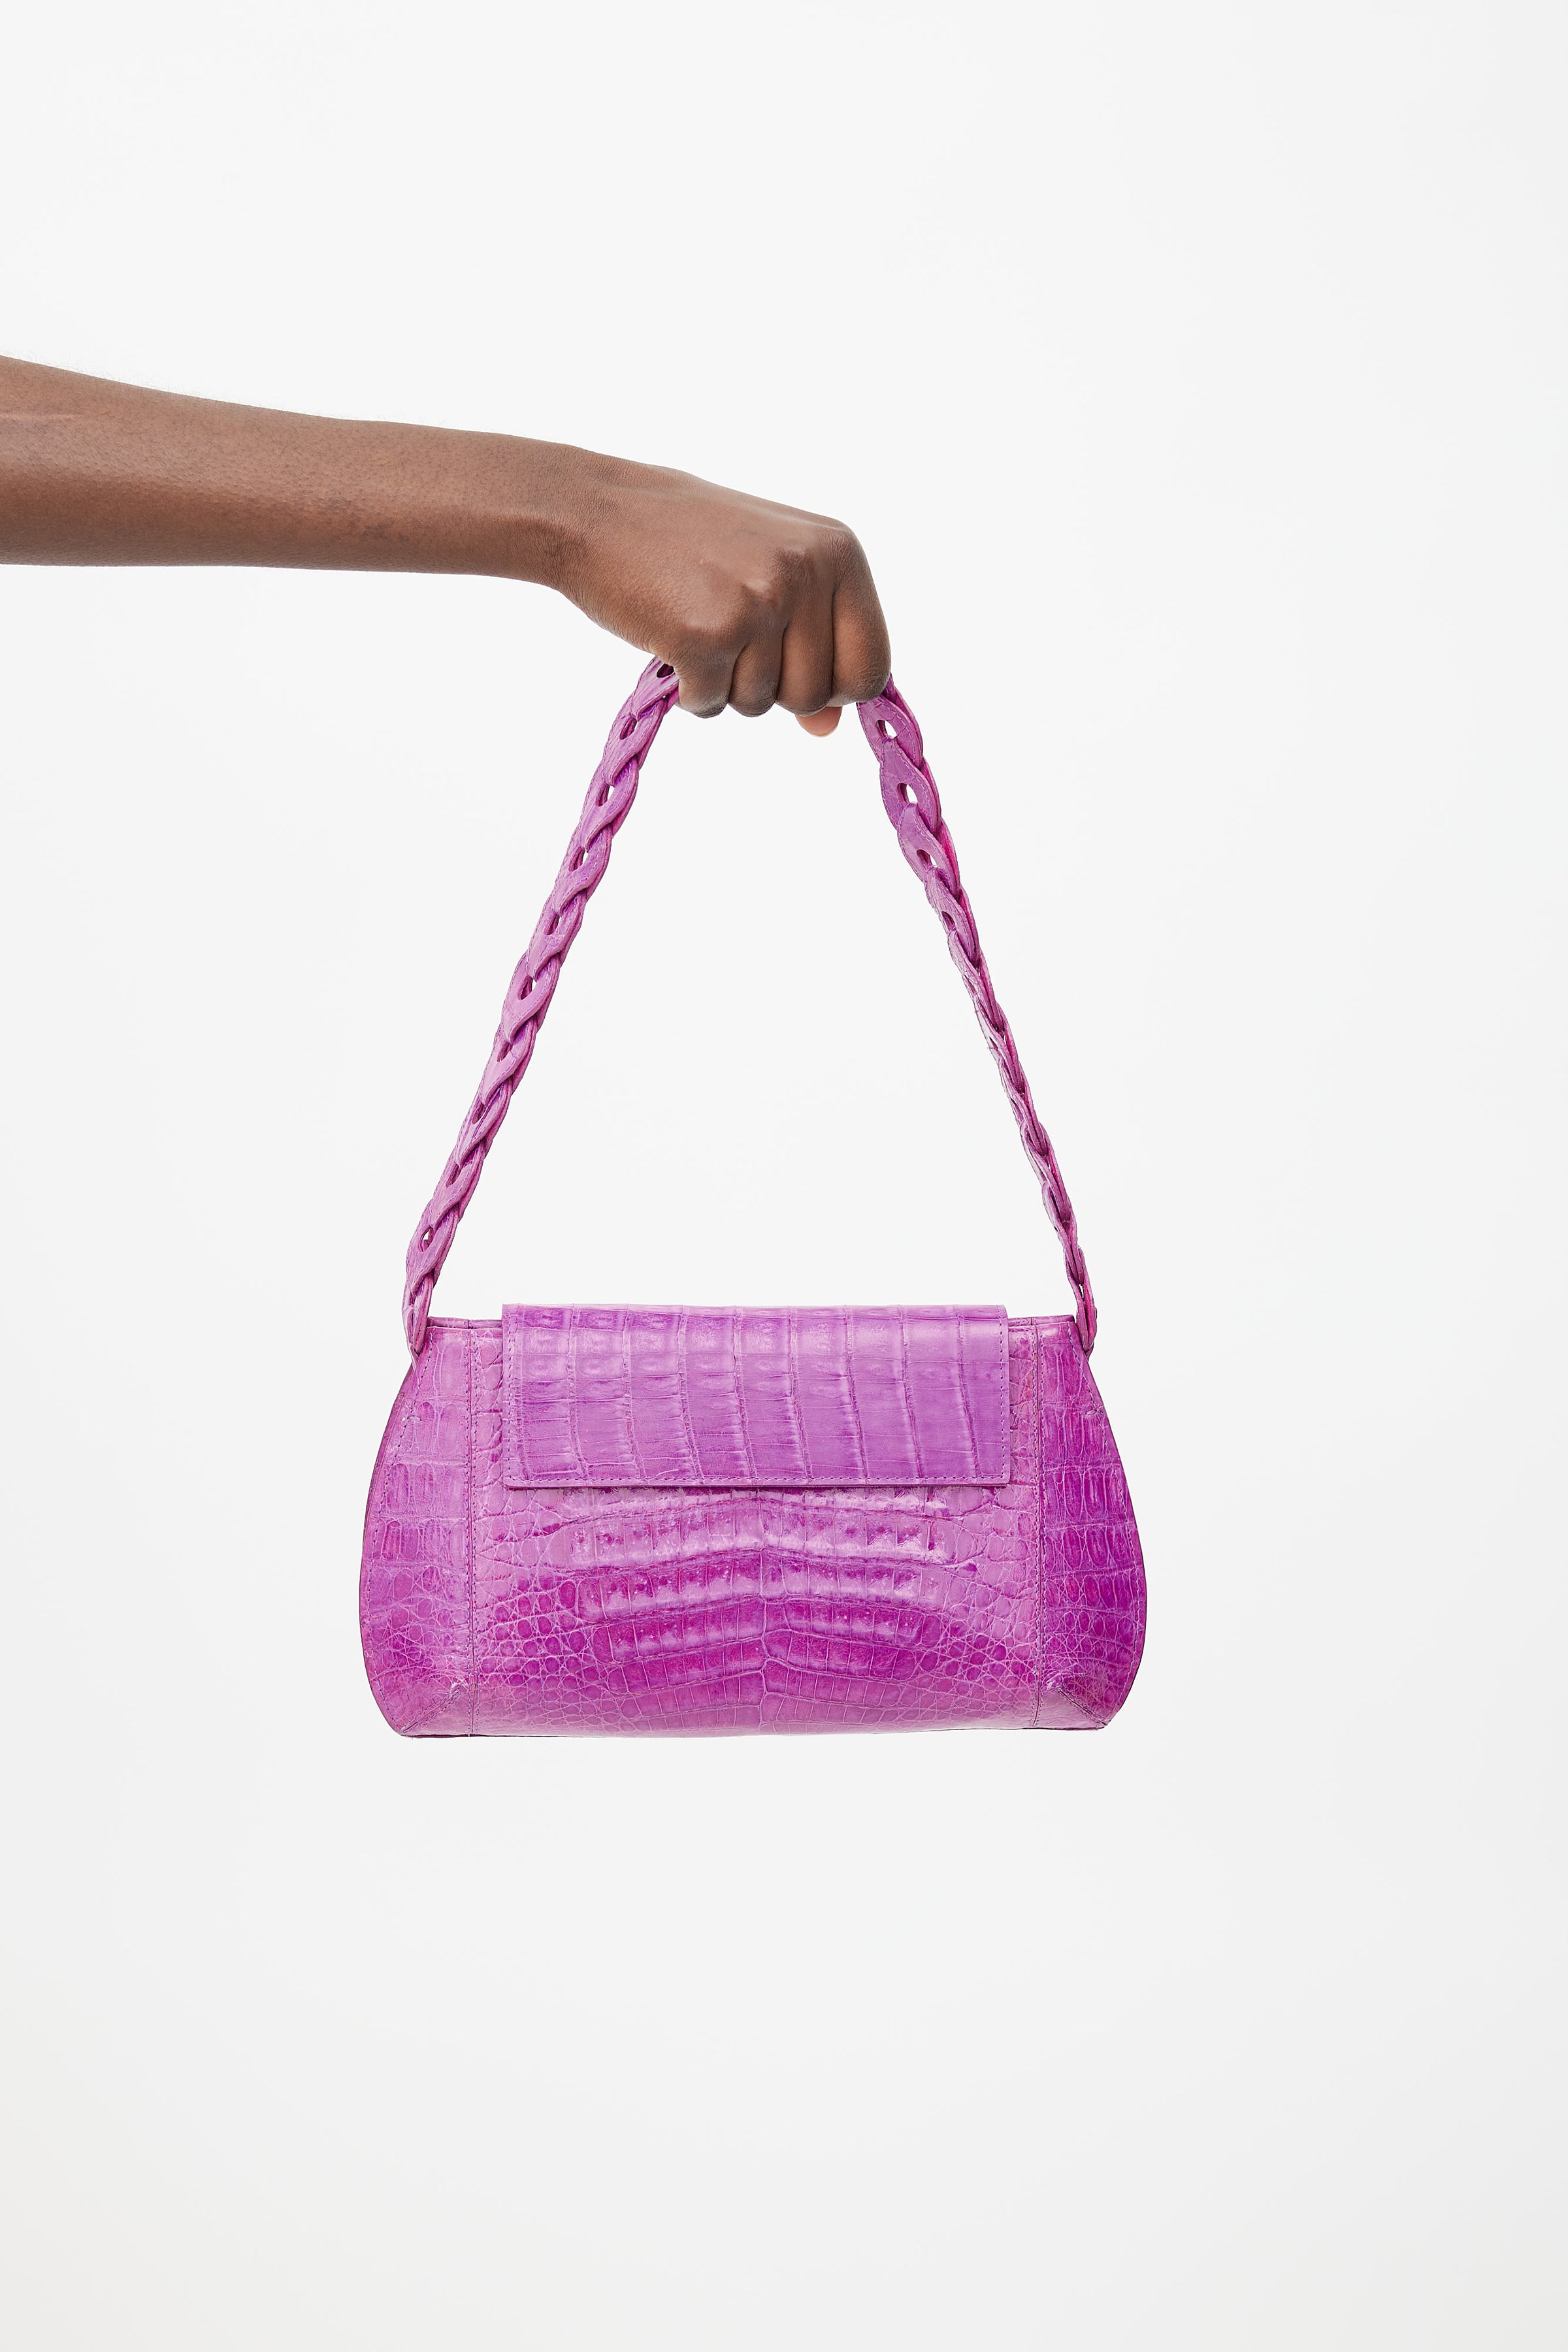 NEW GUESS Women's Mauve Pink Logo Debossed Crossbody Satchel Handbag + Pouch